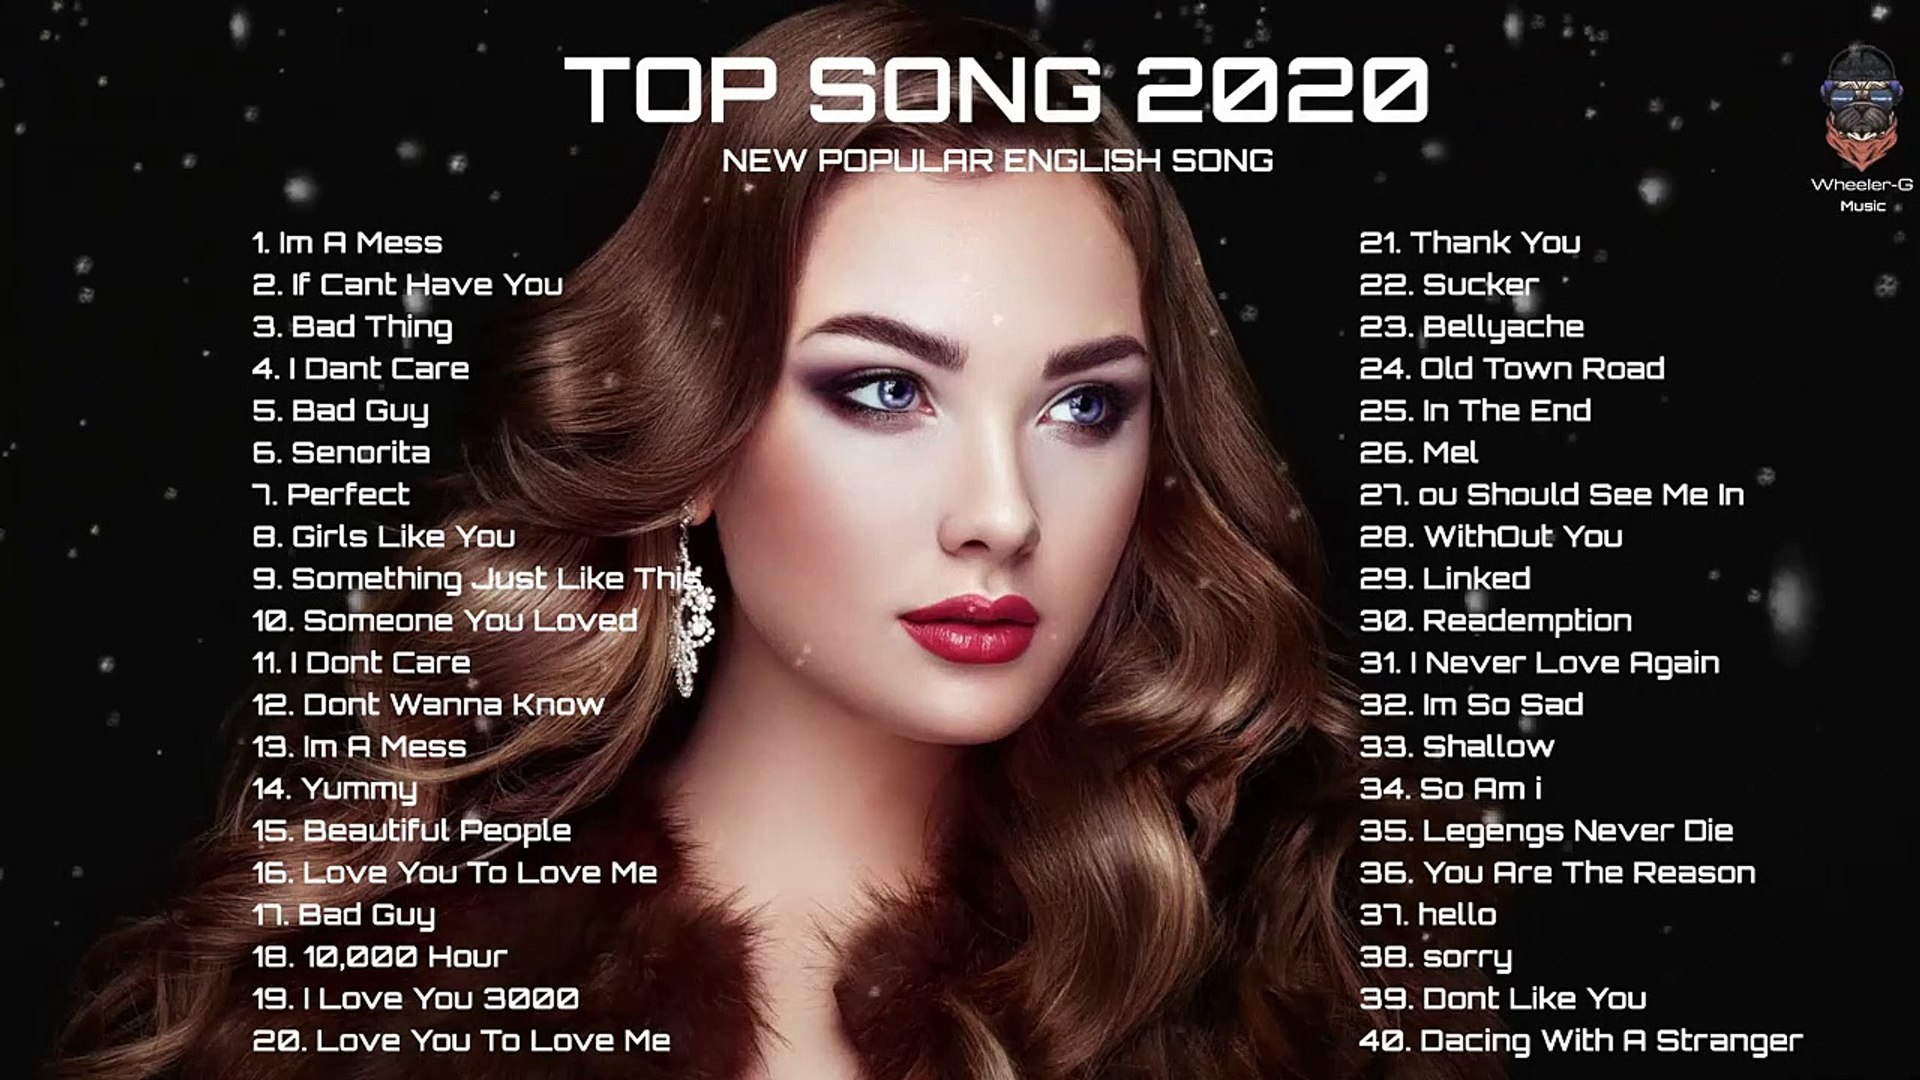 Music Top 50 Song - Music Billboard - Music Top Songs 2020 [Wheeler-G]